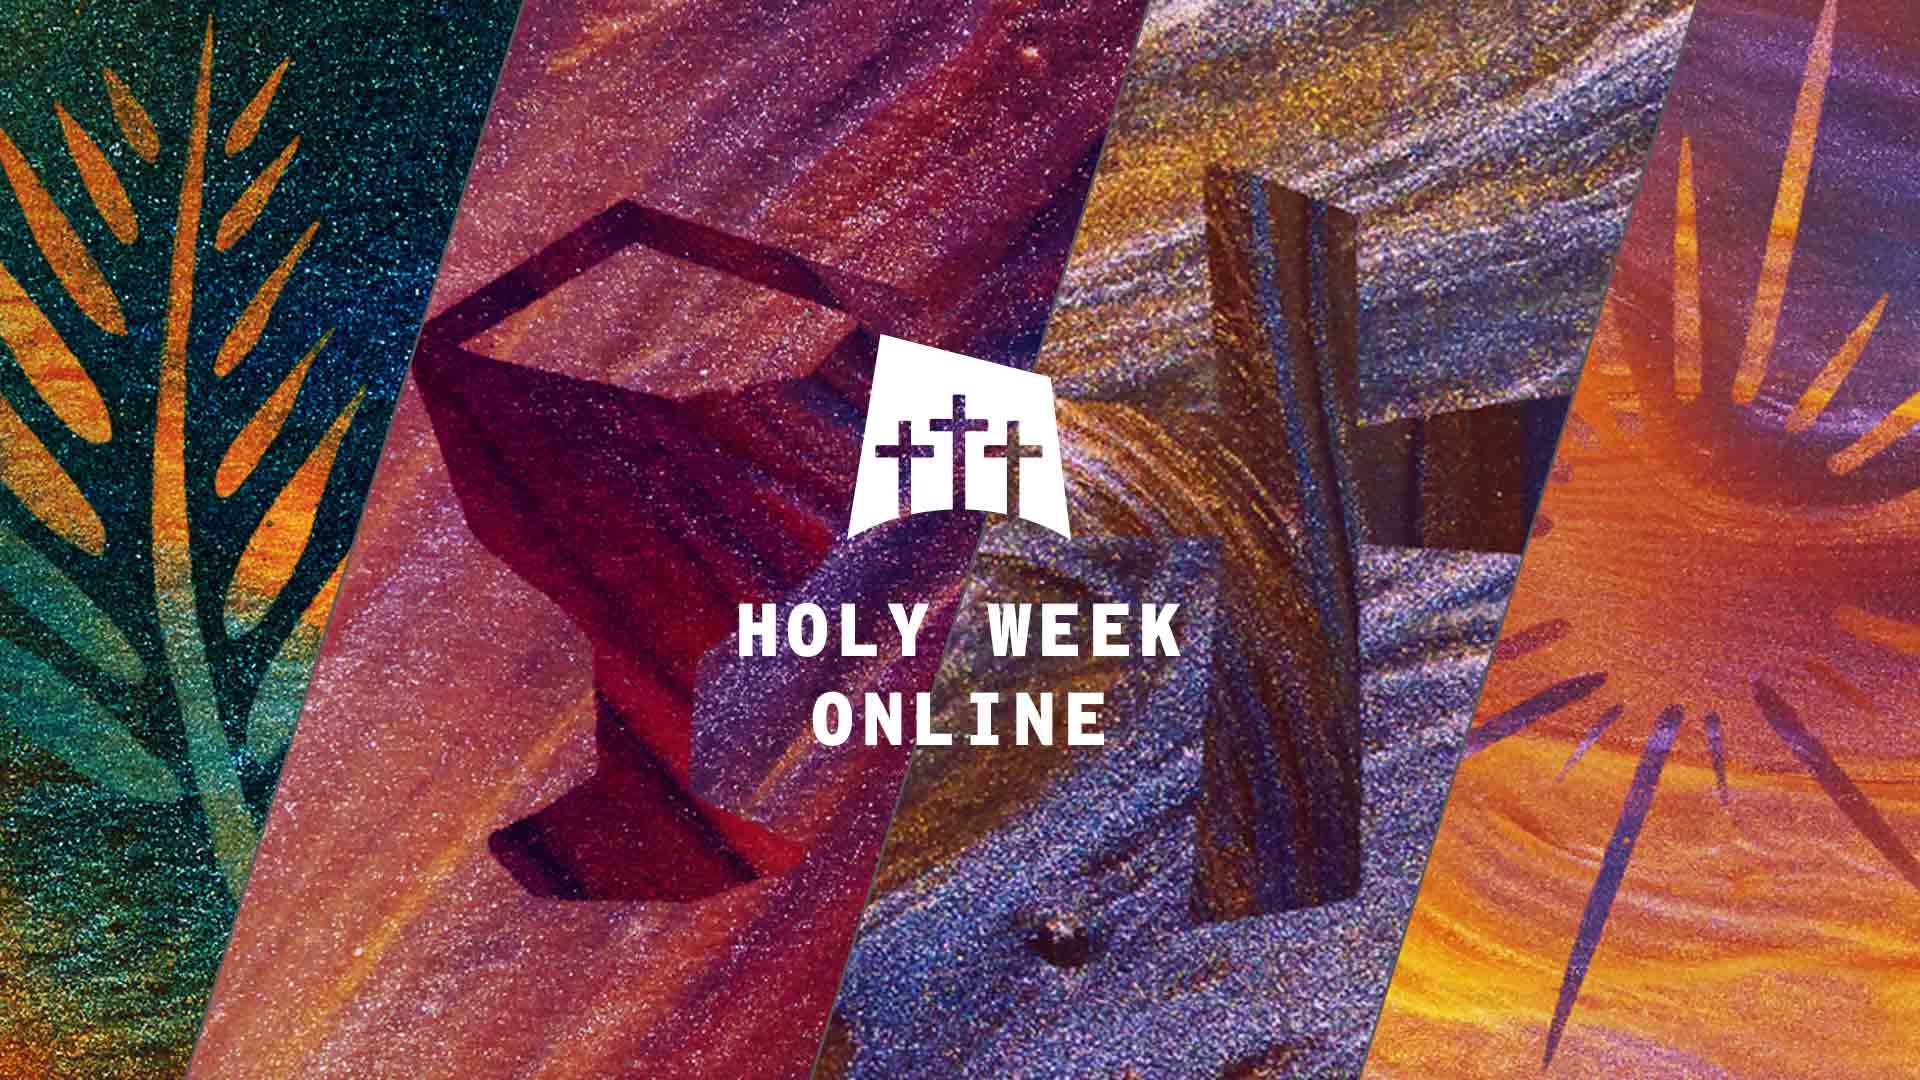 Holy Week 2020